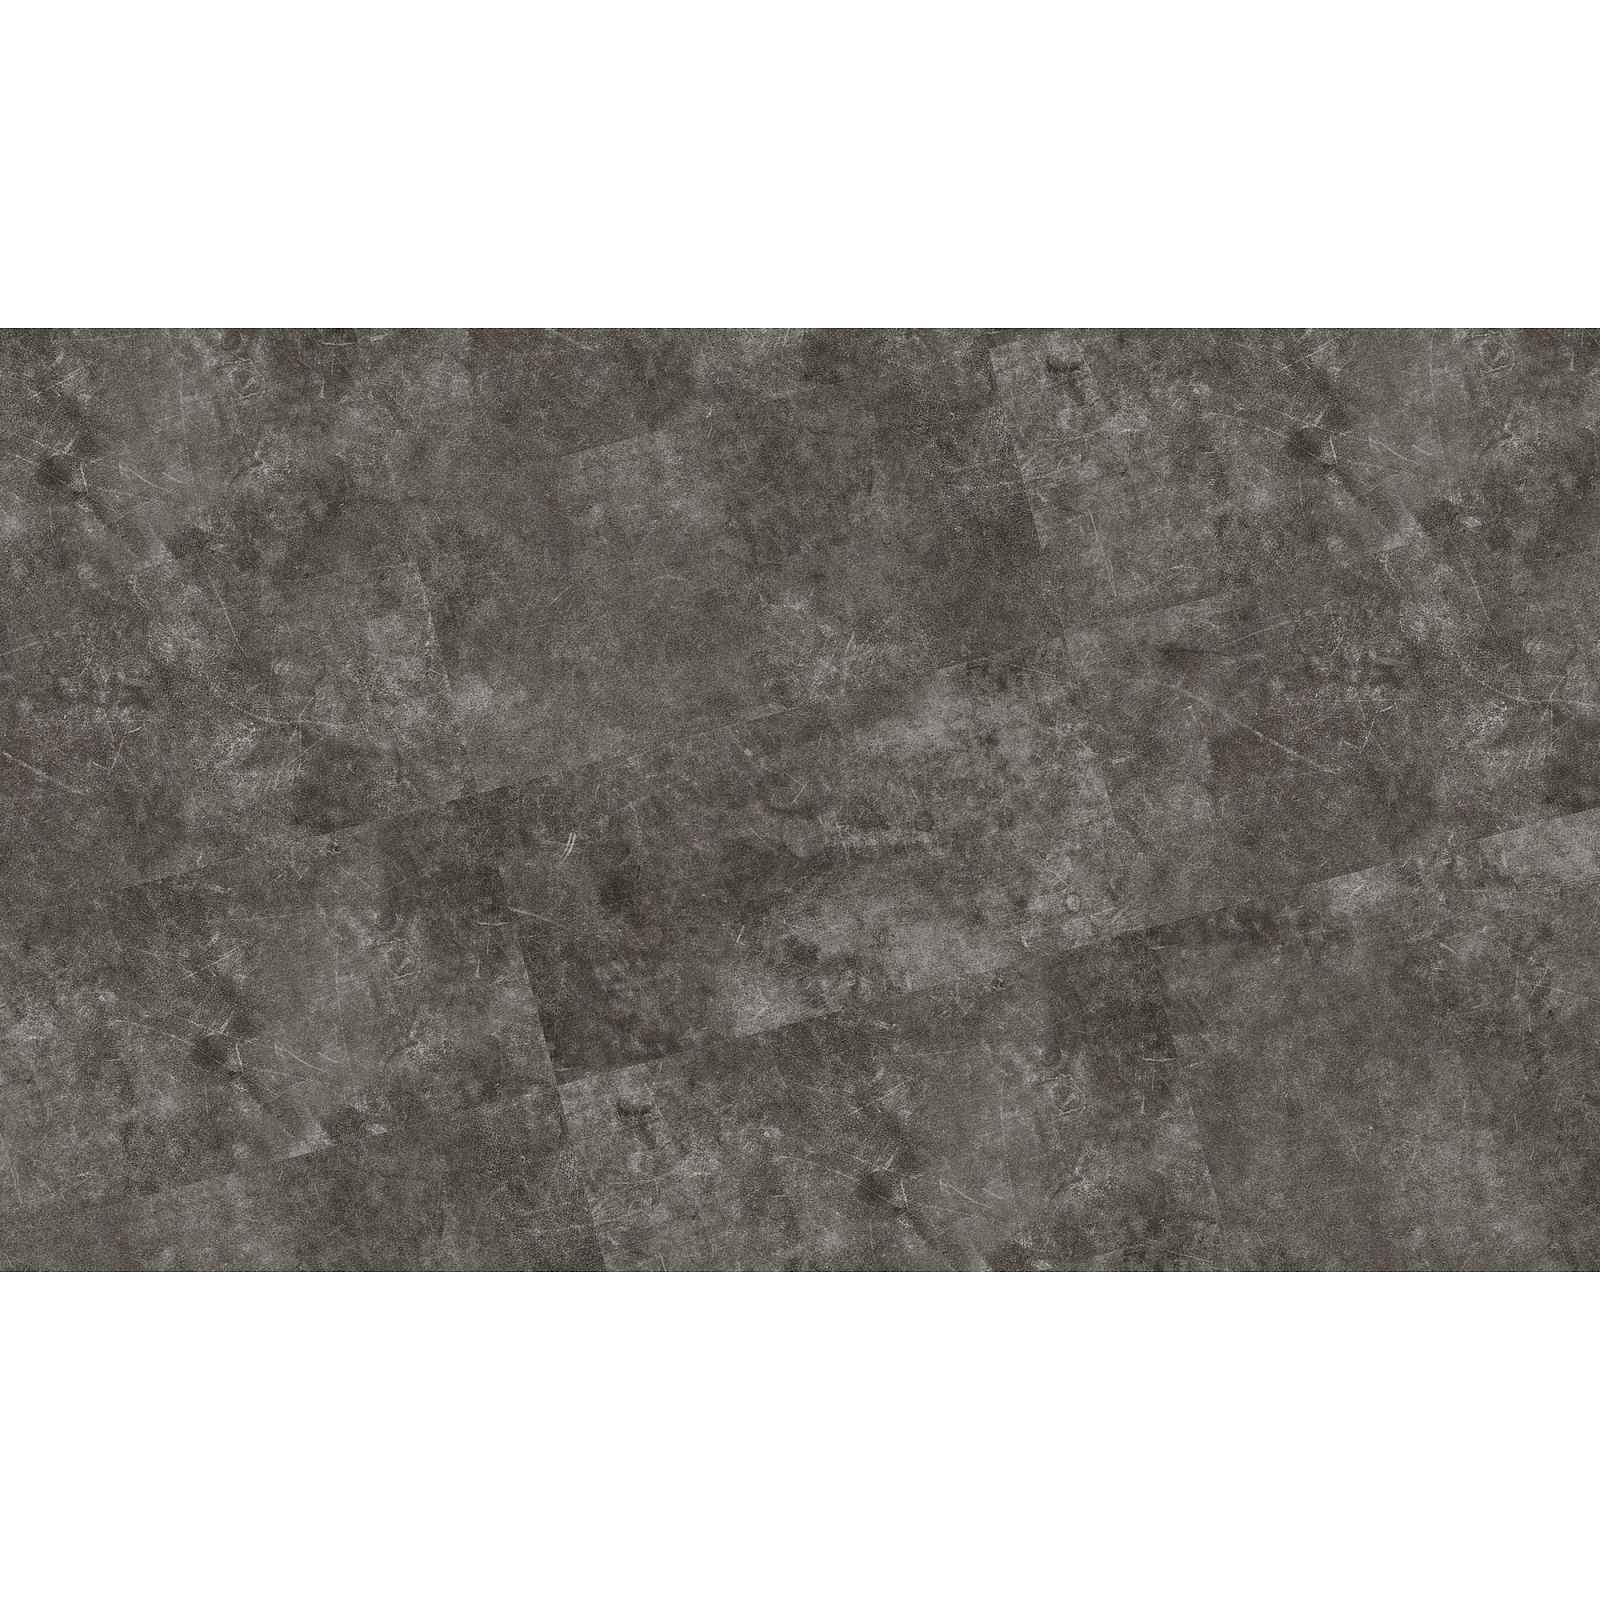 Podlaha vinylová zámková SPC Floor Concept Cement šedý